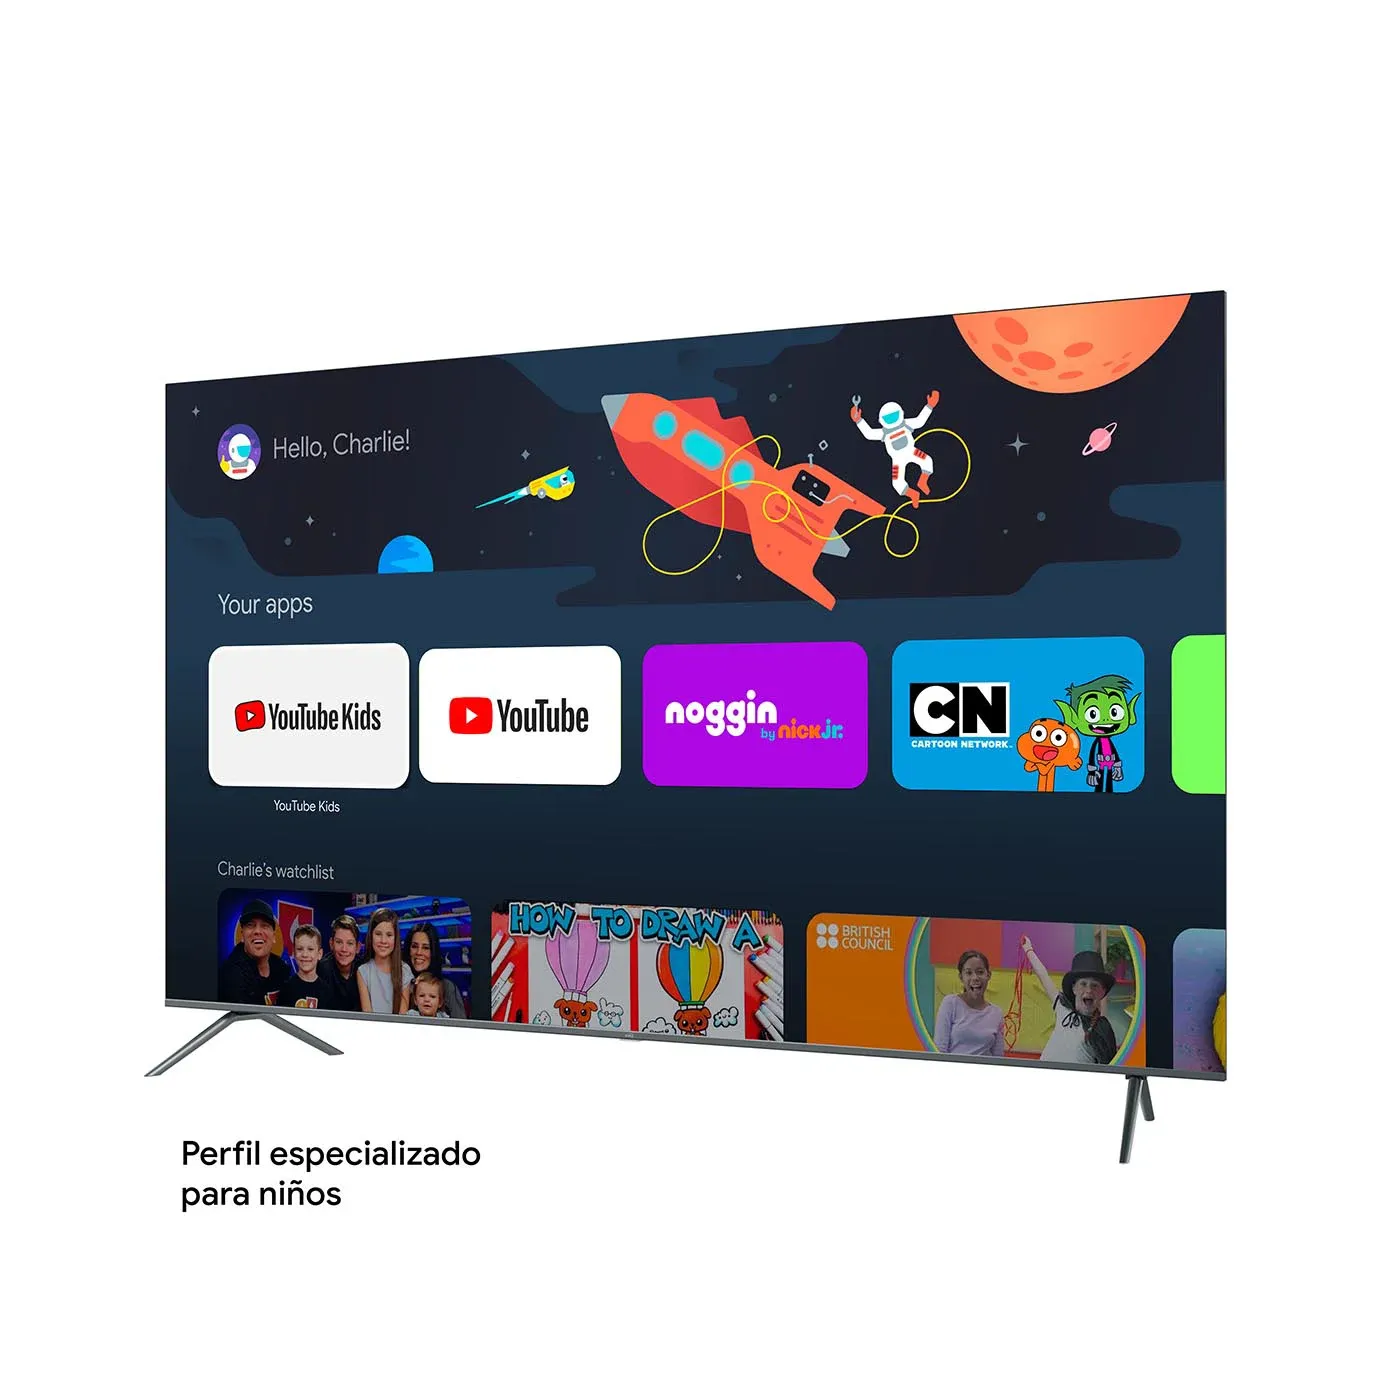 TV KALLEY 85" Pulgadas 214.8 cm K-GTV85UHDQ 4K UHD QLED Smart TV Google